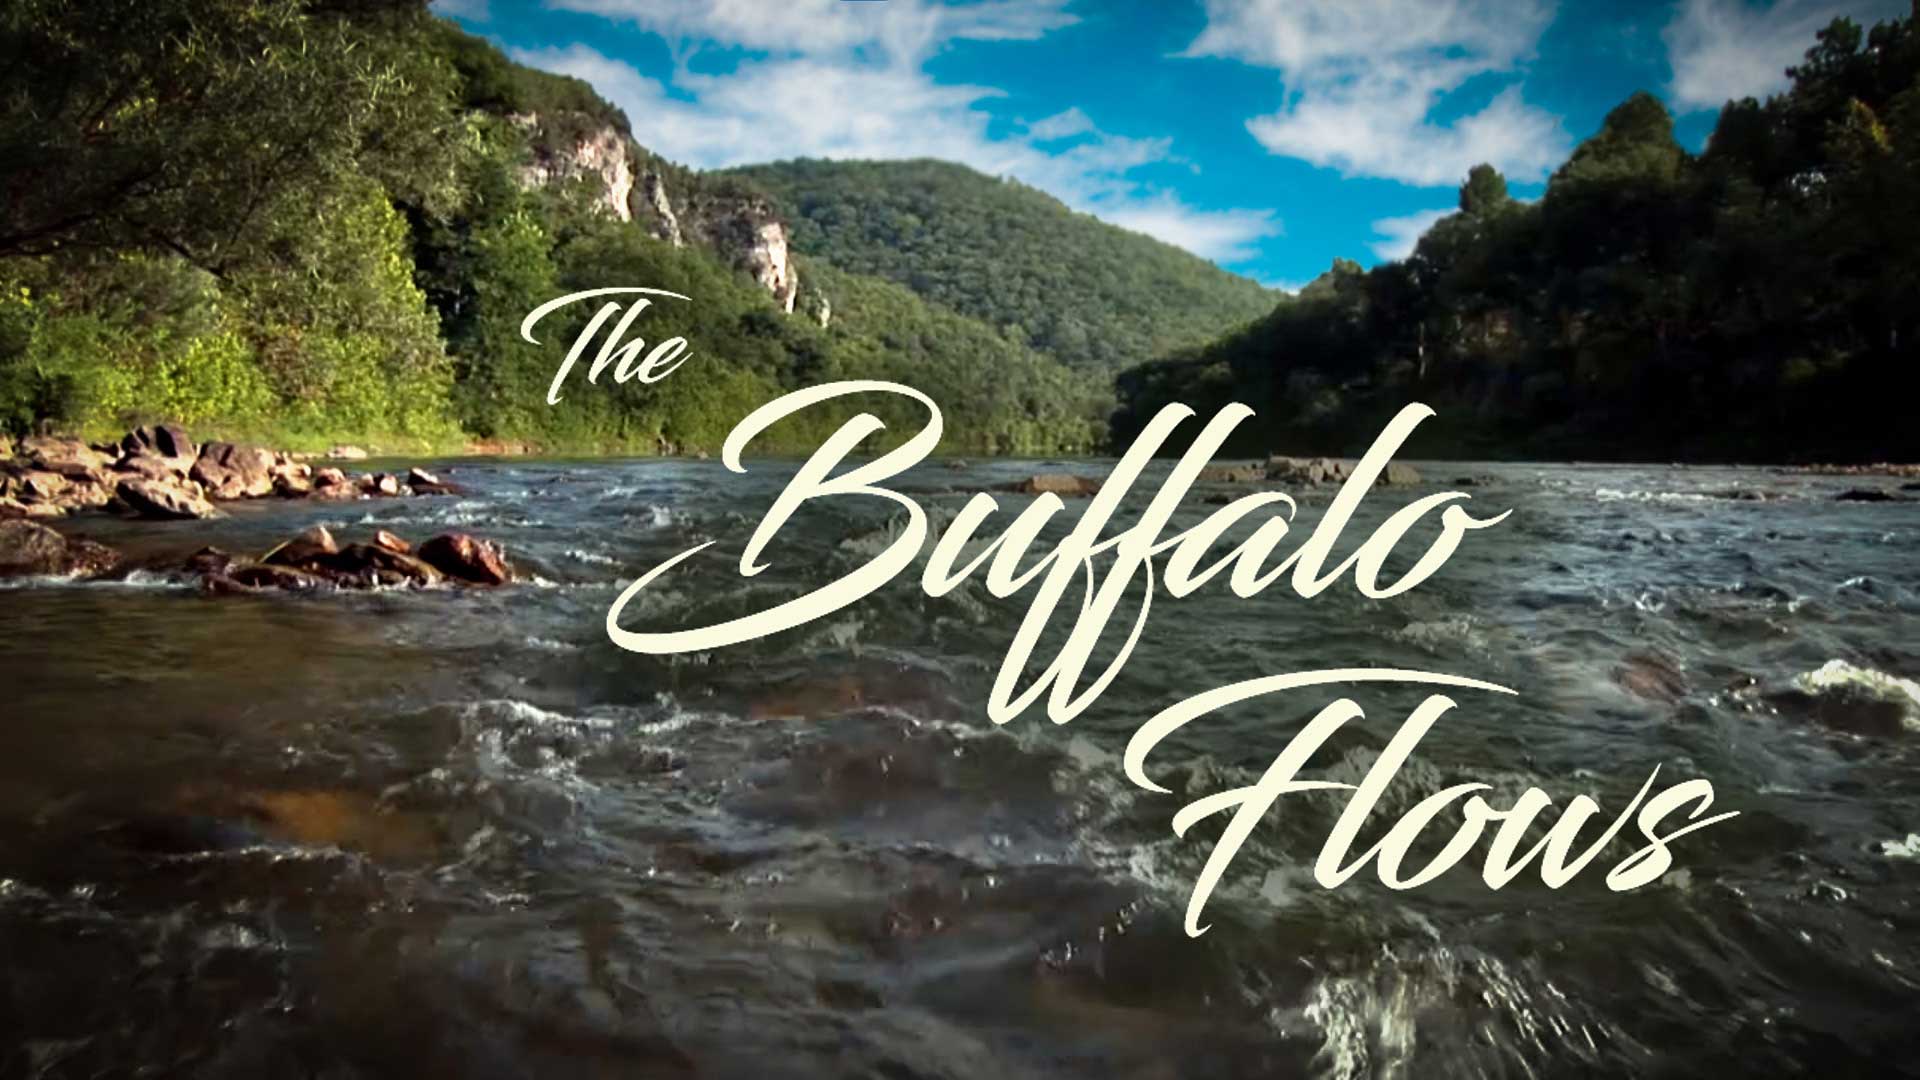 The Buffalo Flows